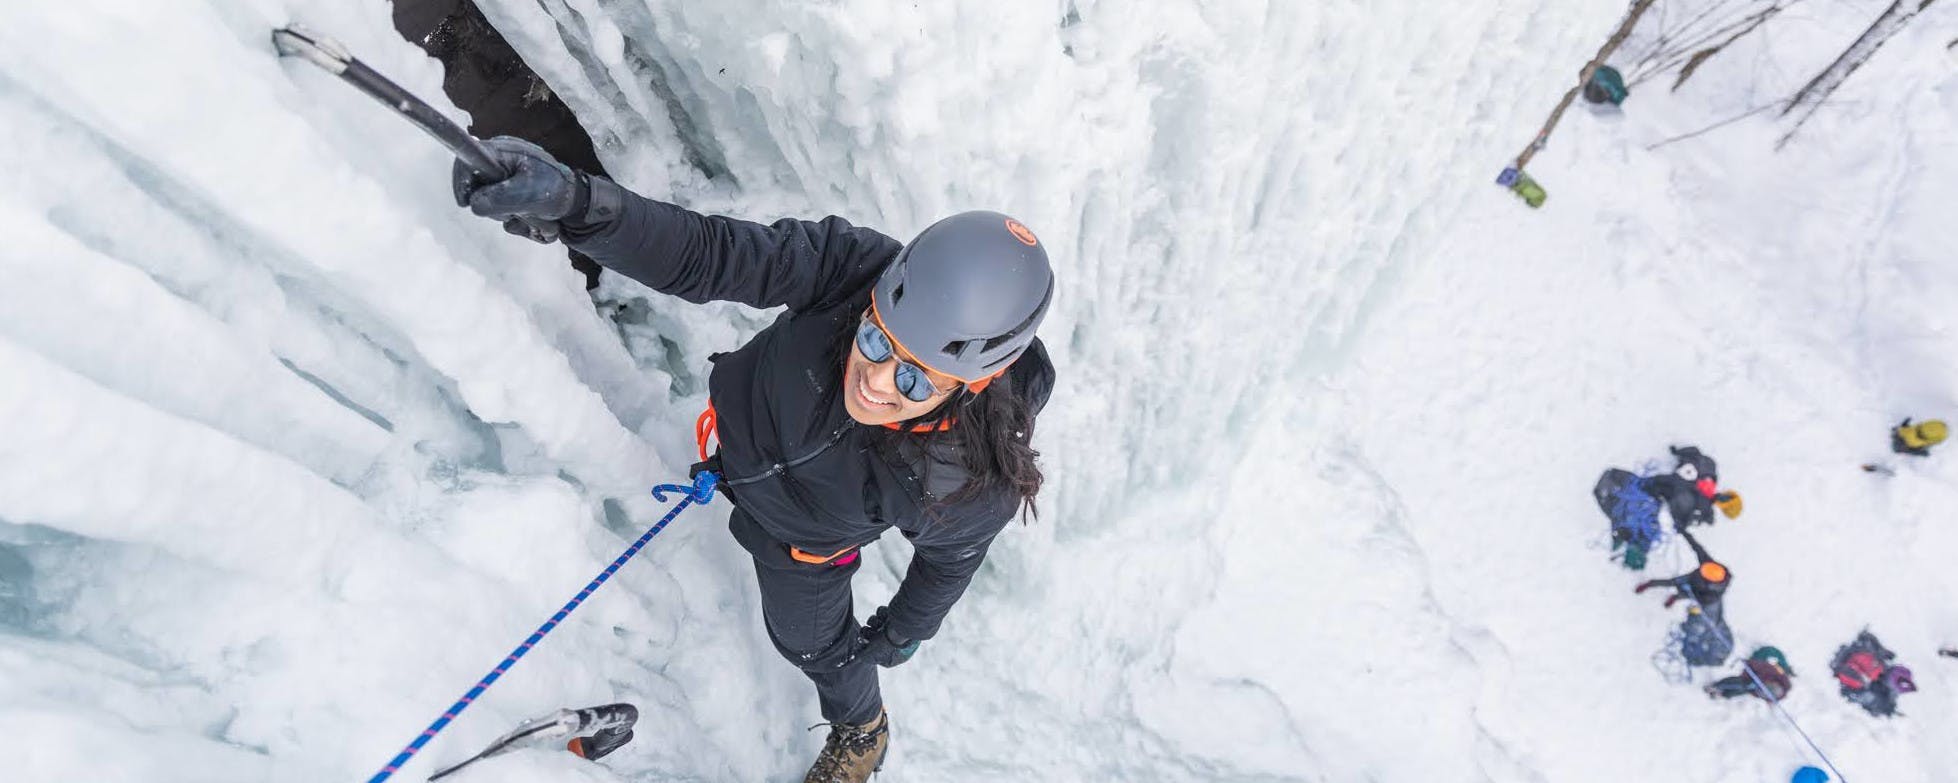 Explorer climbing up a mountain of ice with black climbing gear